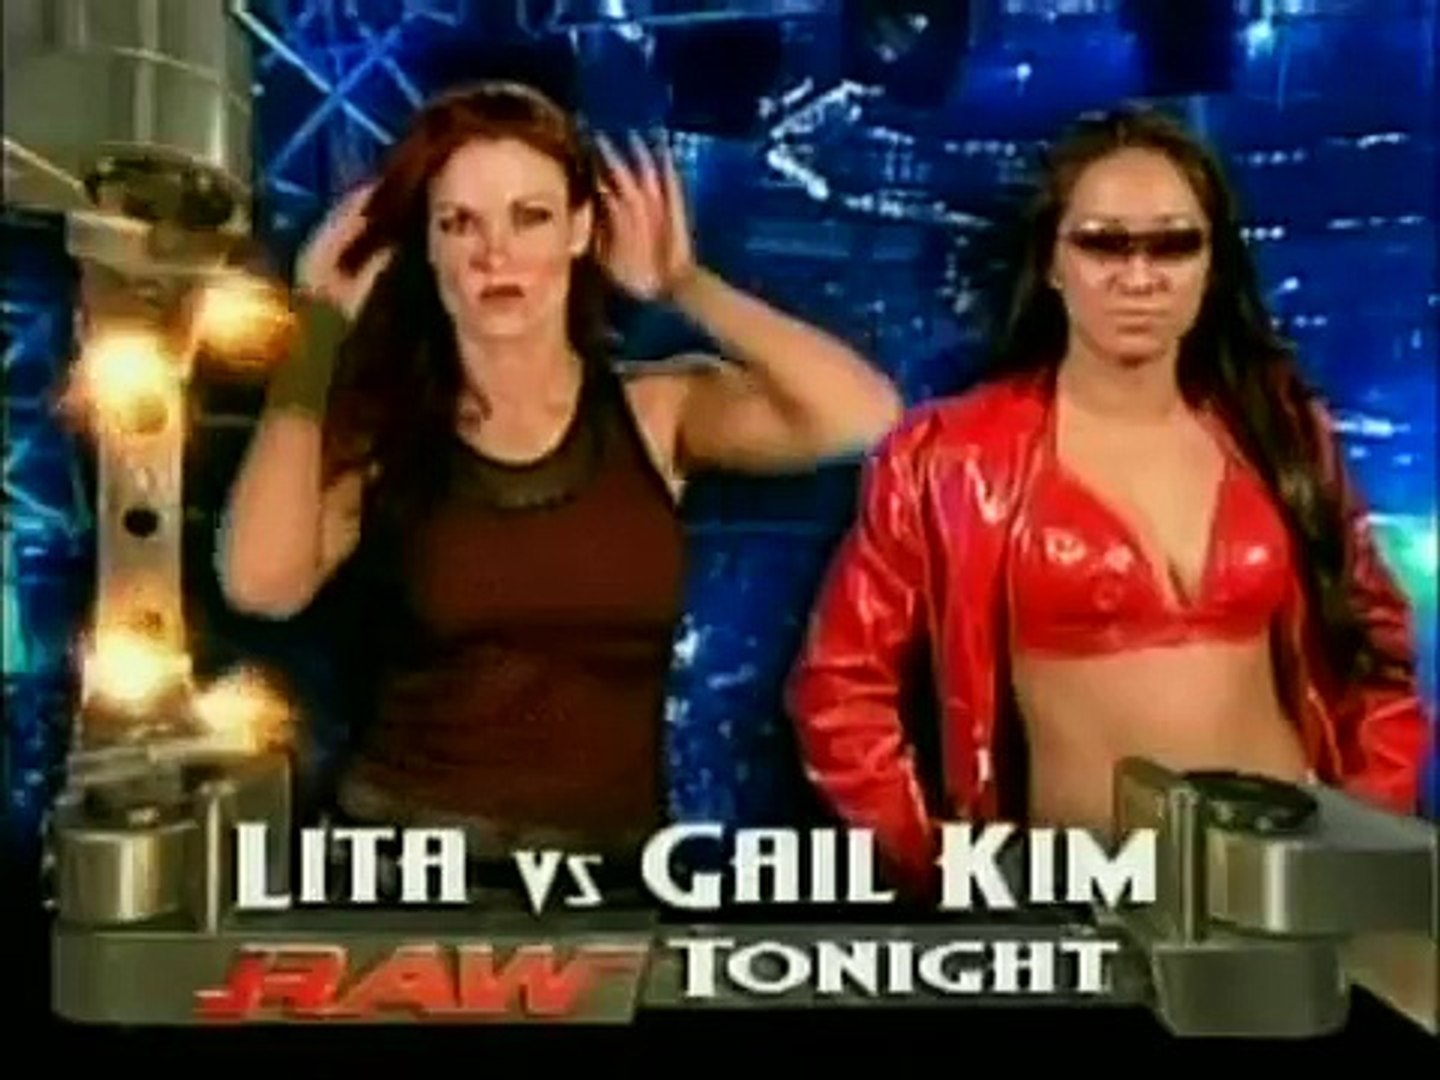 Gail Kim vs. Lita - video Dailymotion